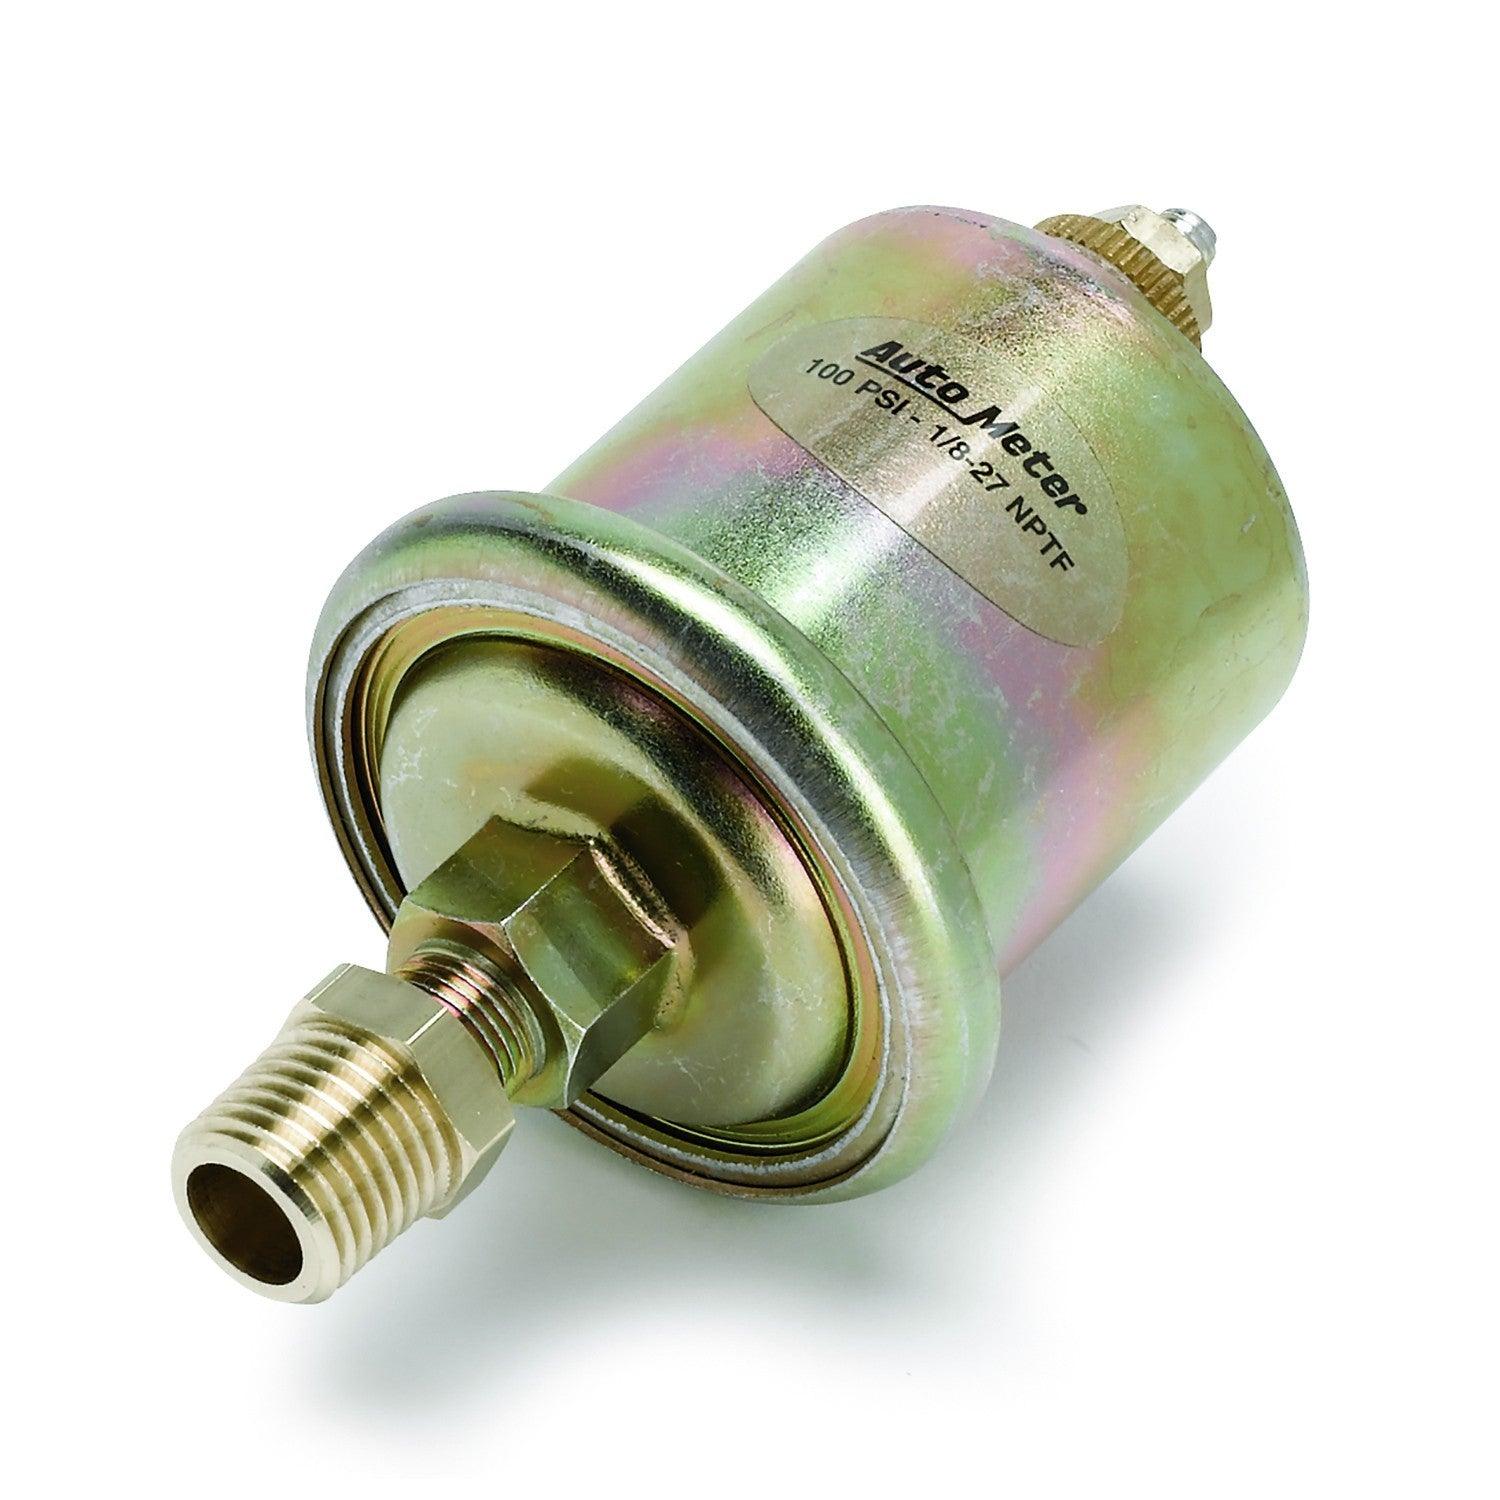 Sensor Unit Oil Pressure 0-100psi 1/8npt Male - Burlile Performance Products